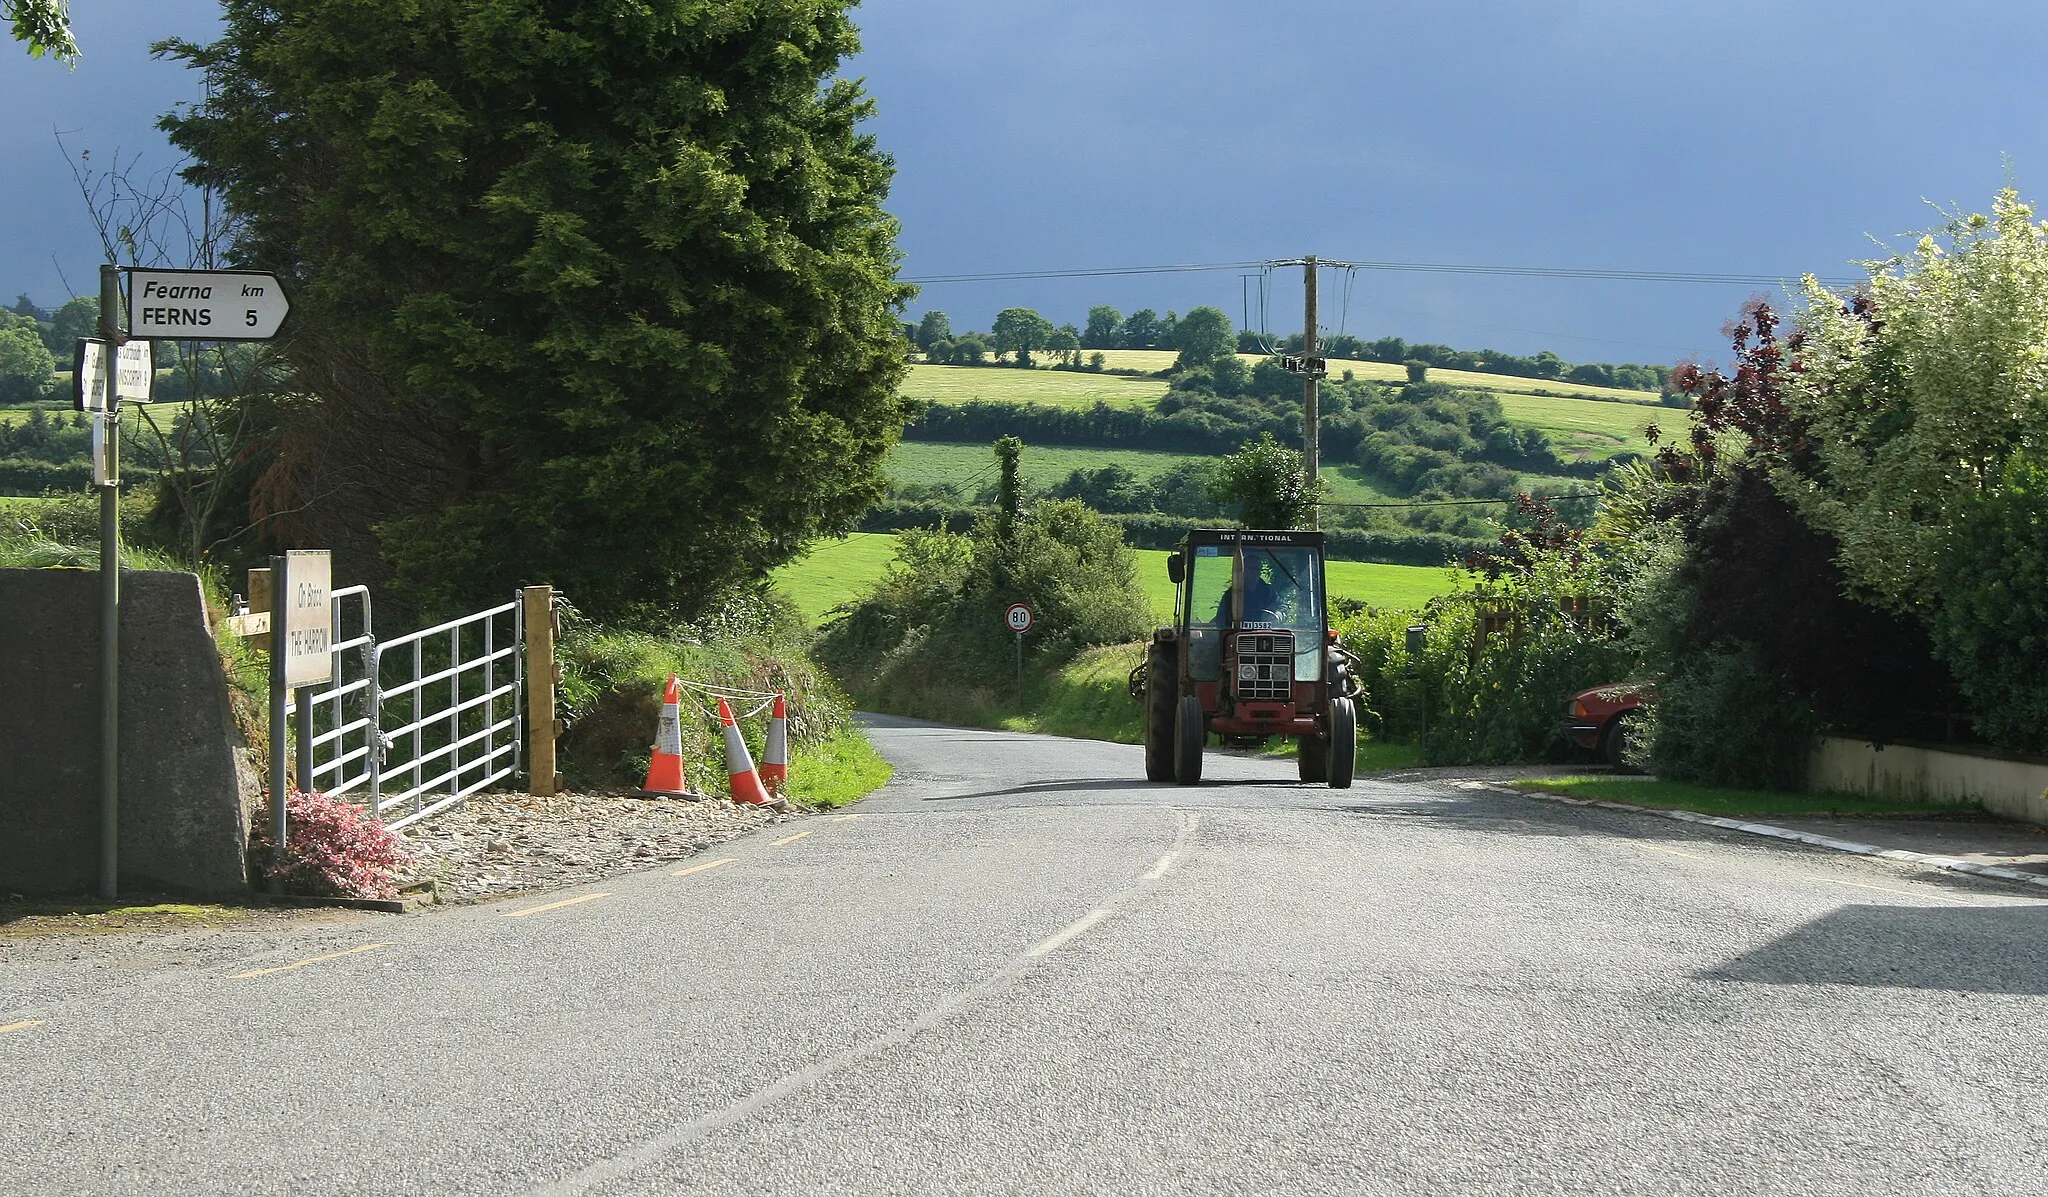 Photo showing: IHC Tractor approaching the hamlet of The Harrow, near to Myaugh, Glen Village, Boleyvogue and Tinnacross Cross Roads, County Wexford, Ireland.